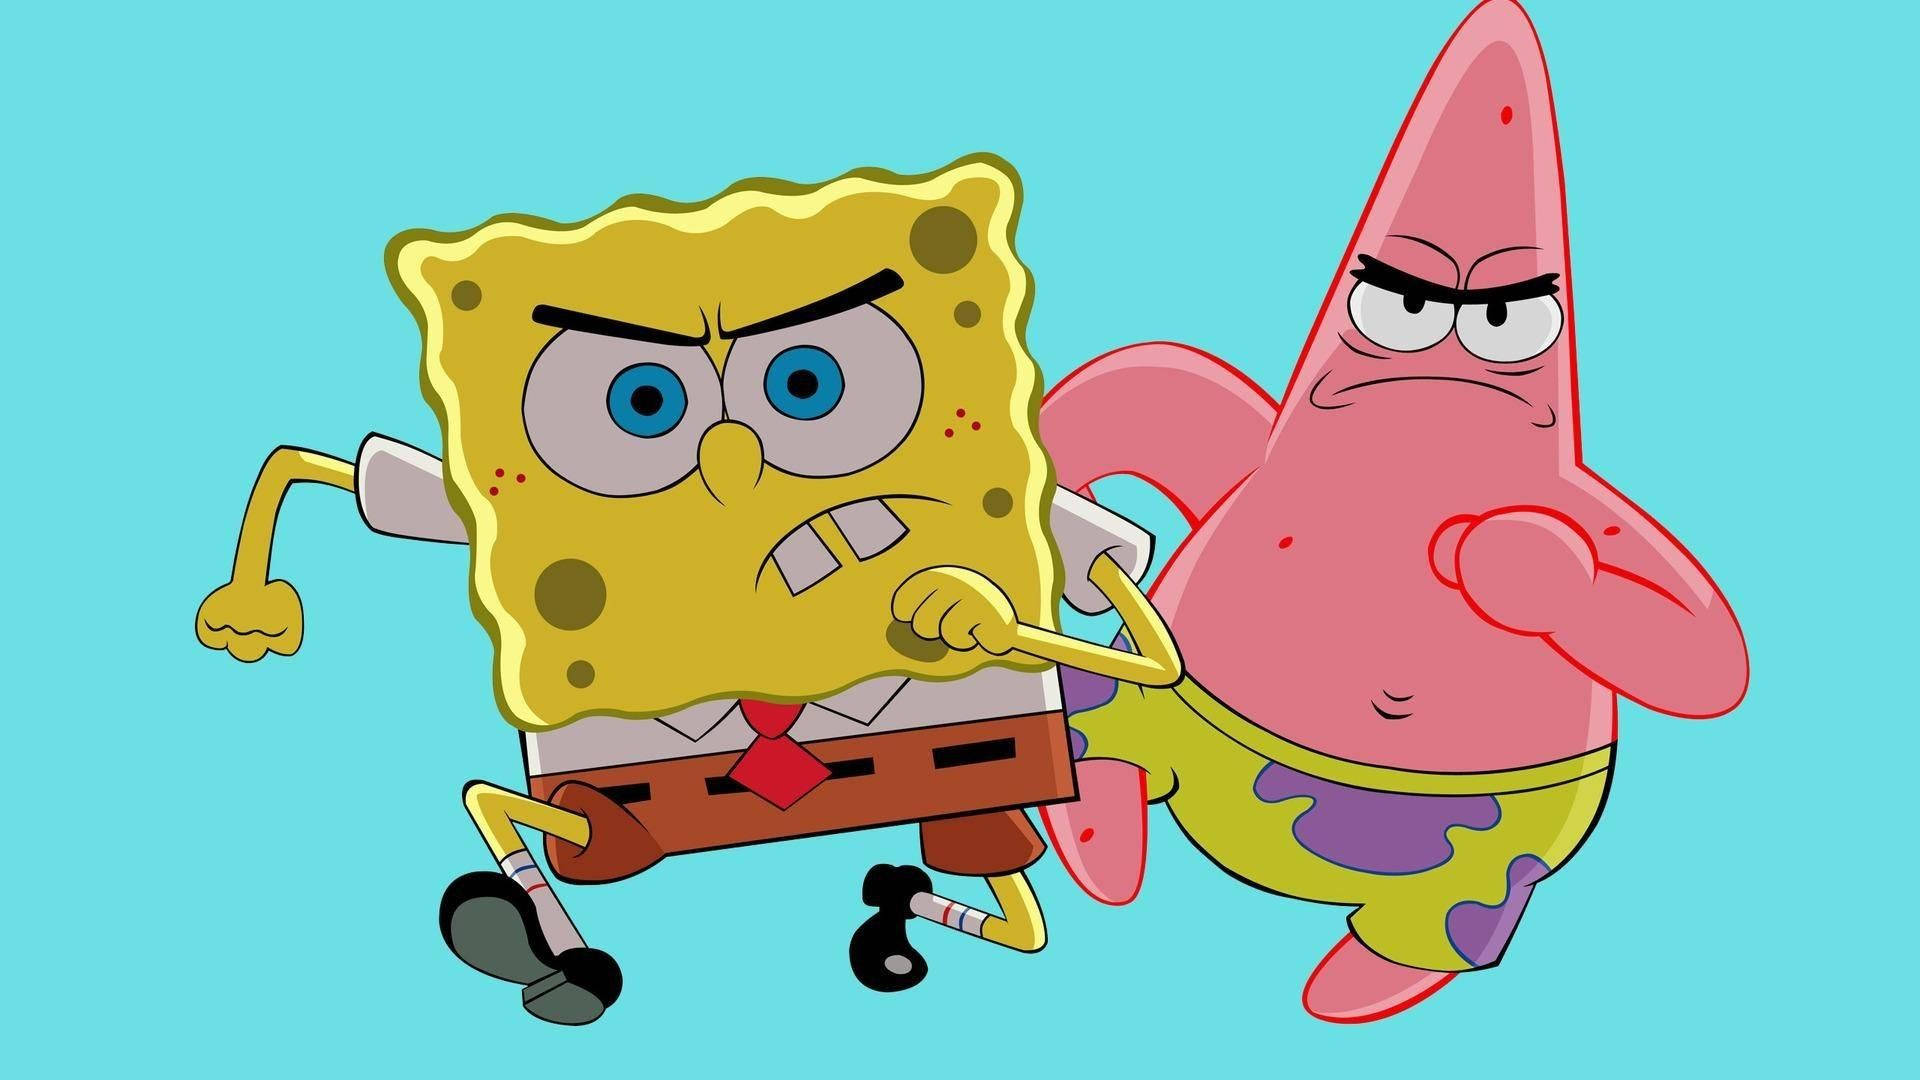 Angry Patrick Star And Spongebob